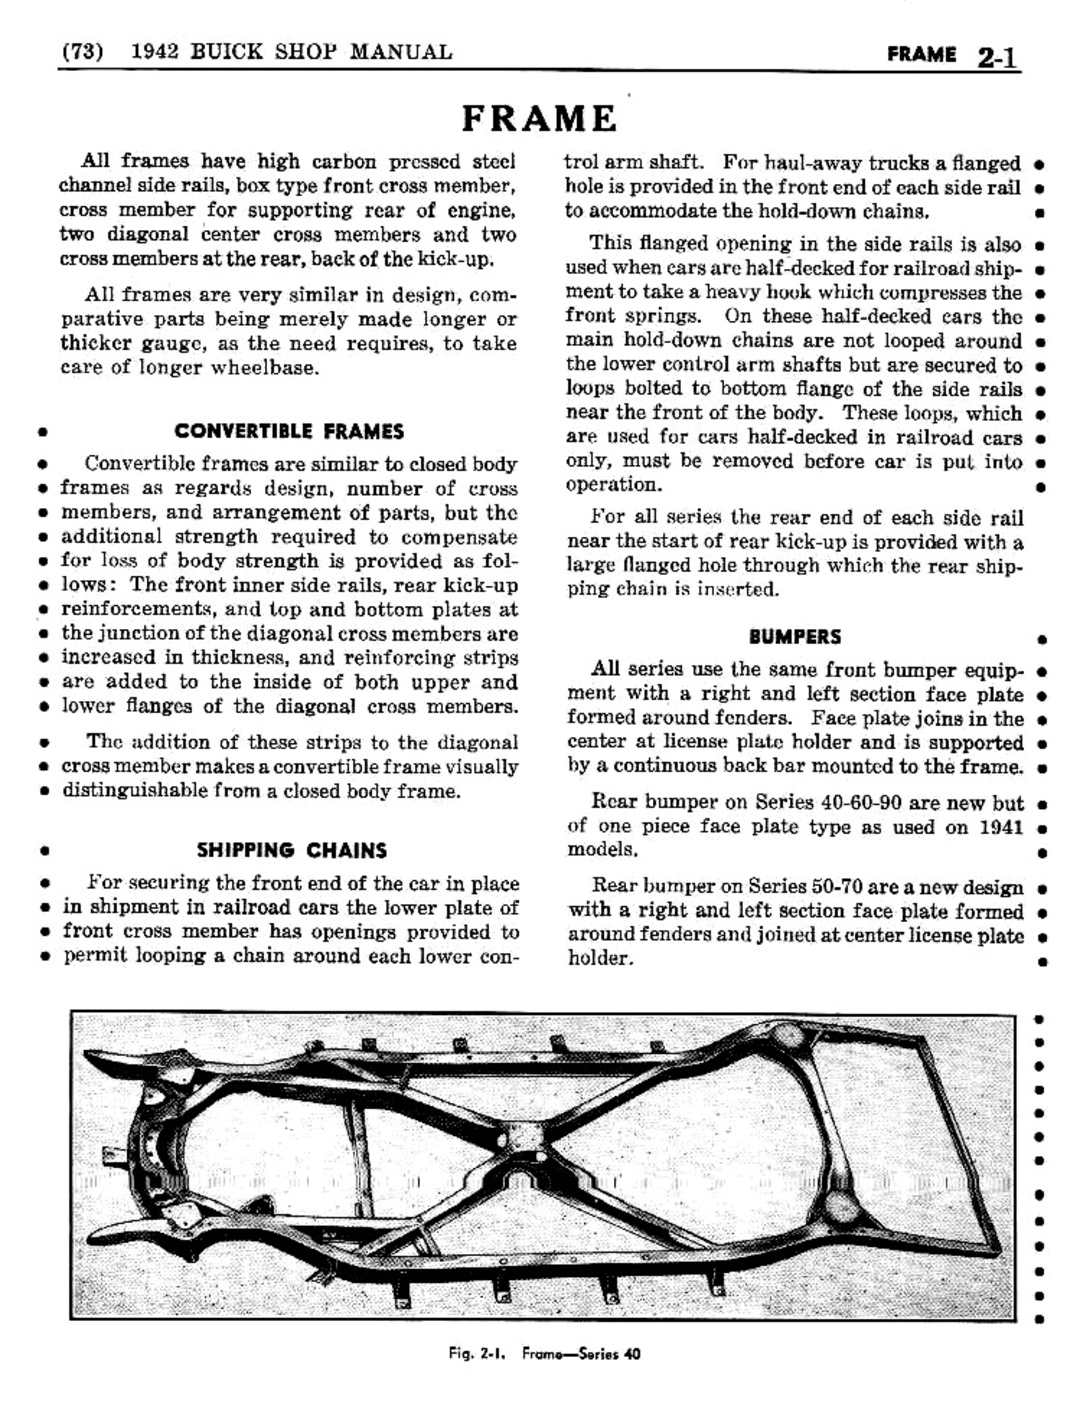 n_03 1942 Buick Shop Manual - Frame-001-001.jpg